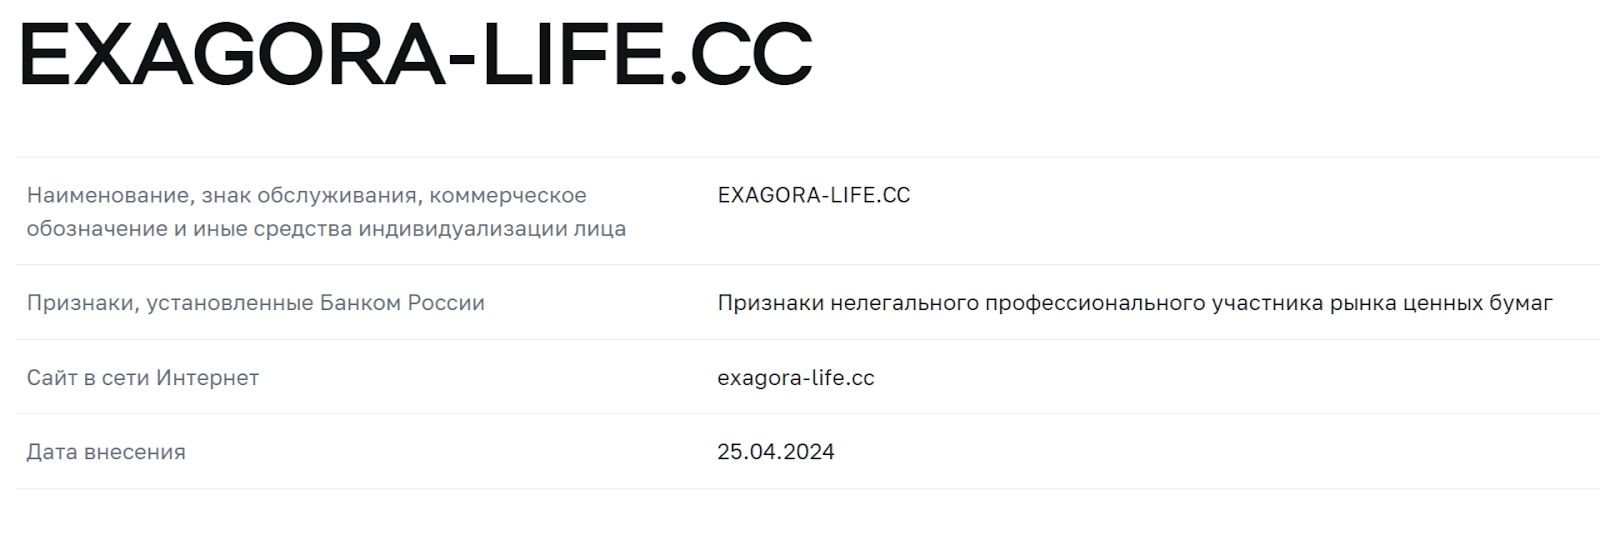 exagora life cc